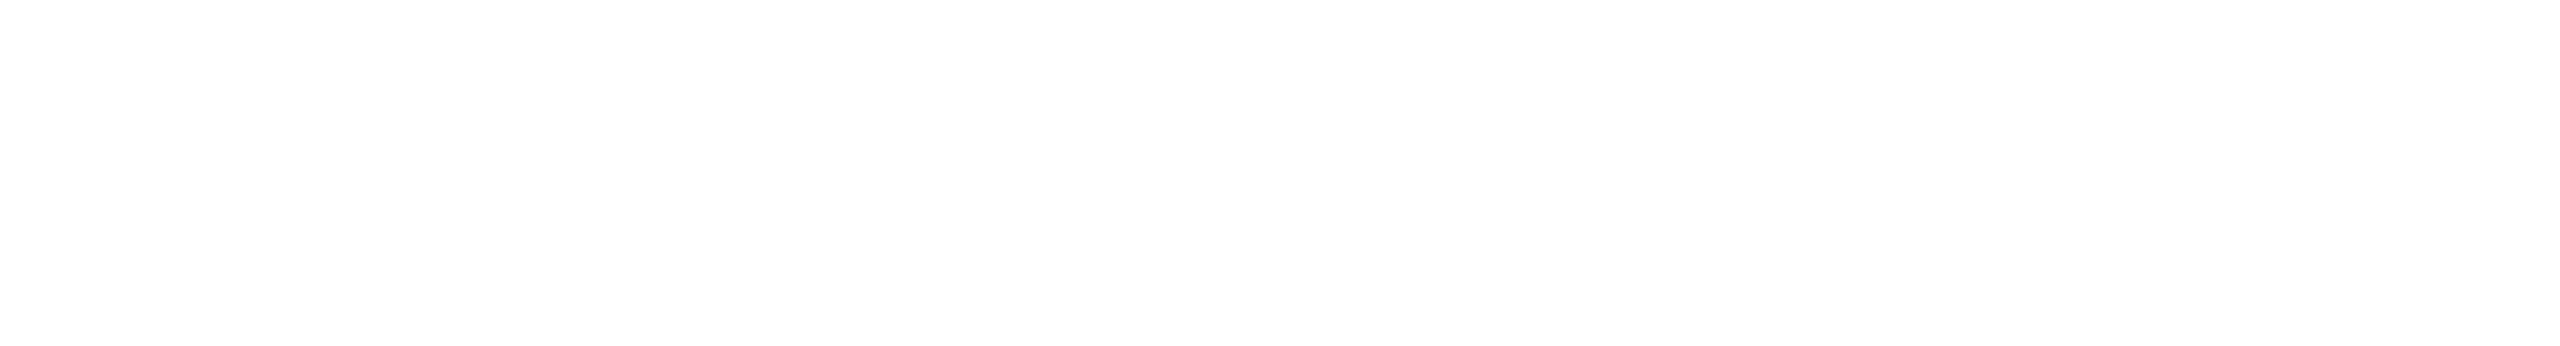 White New York Times logo